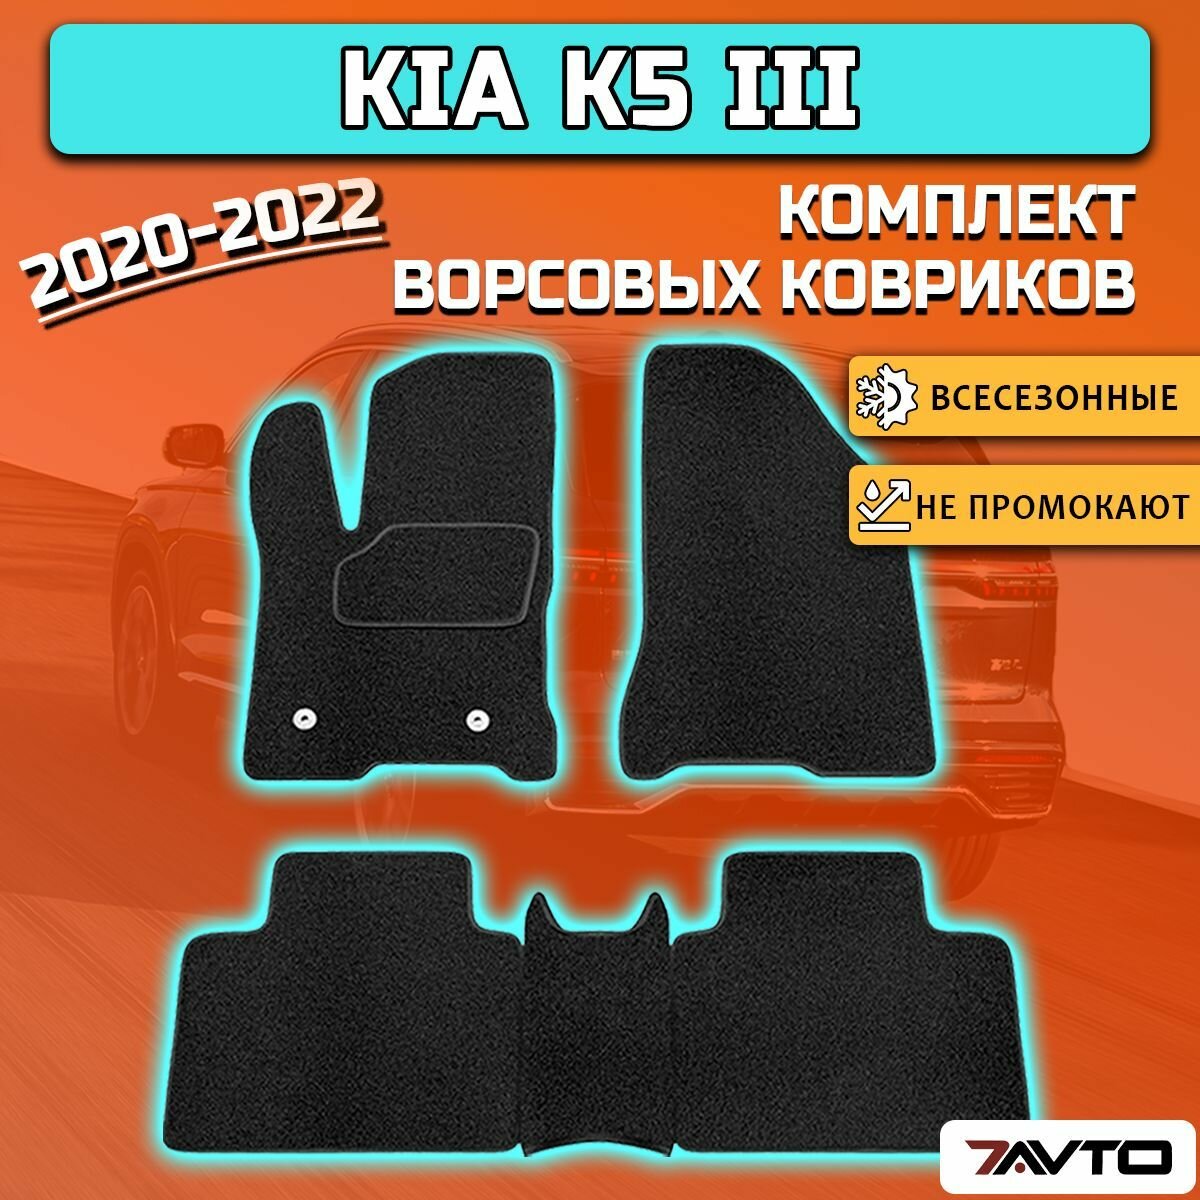 Комплект ворсовых ковриков ECO на Kia K5 III 2020-2022 / Киа К5